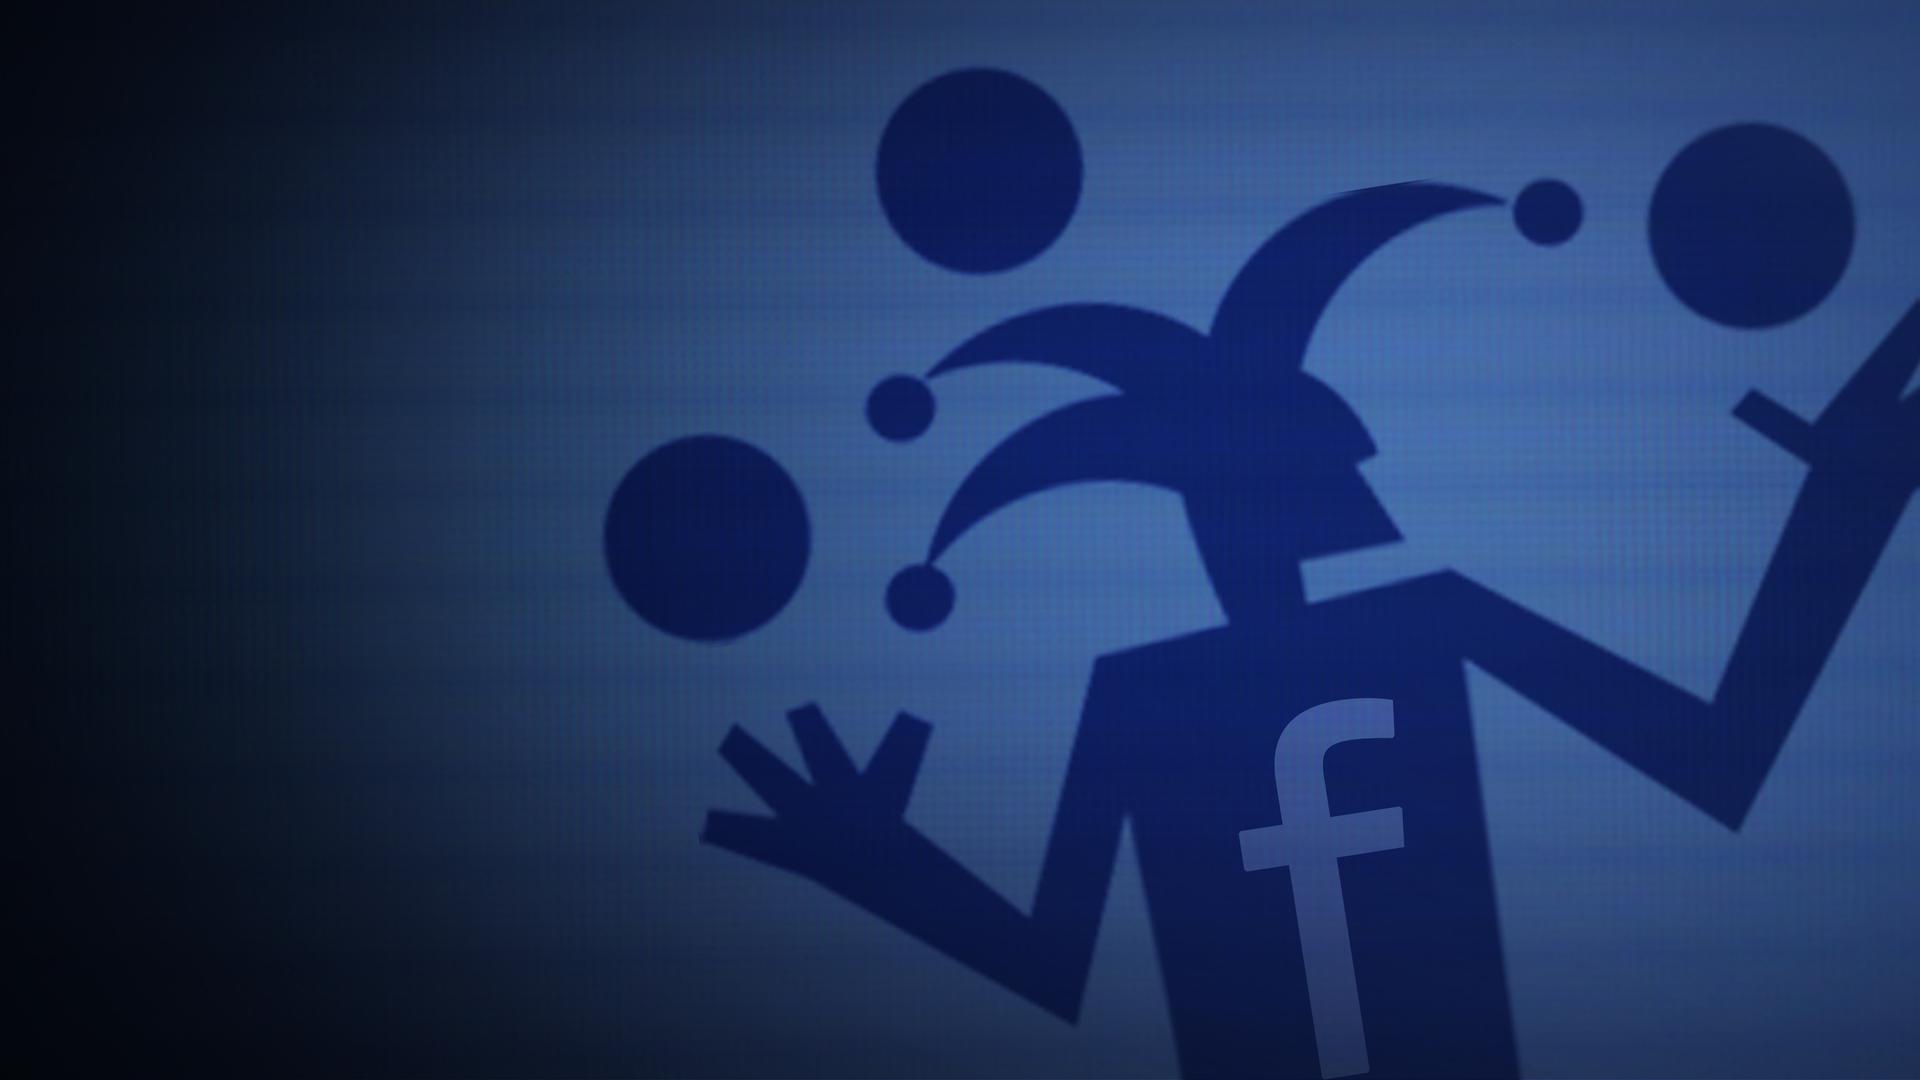 Facebook Follies: The Unexpected Consequences of the Social Media